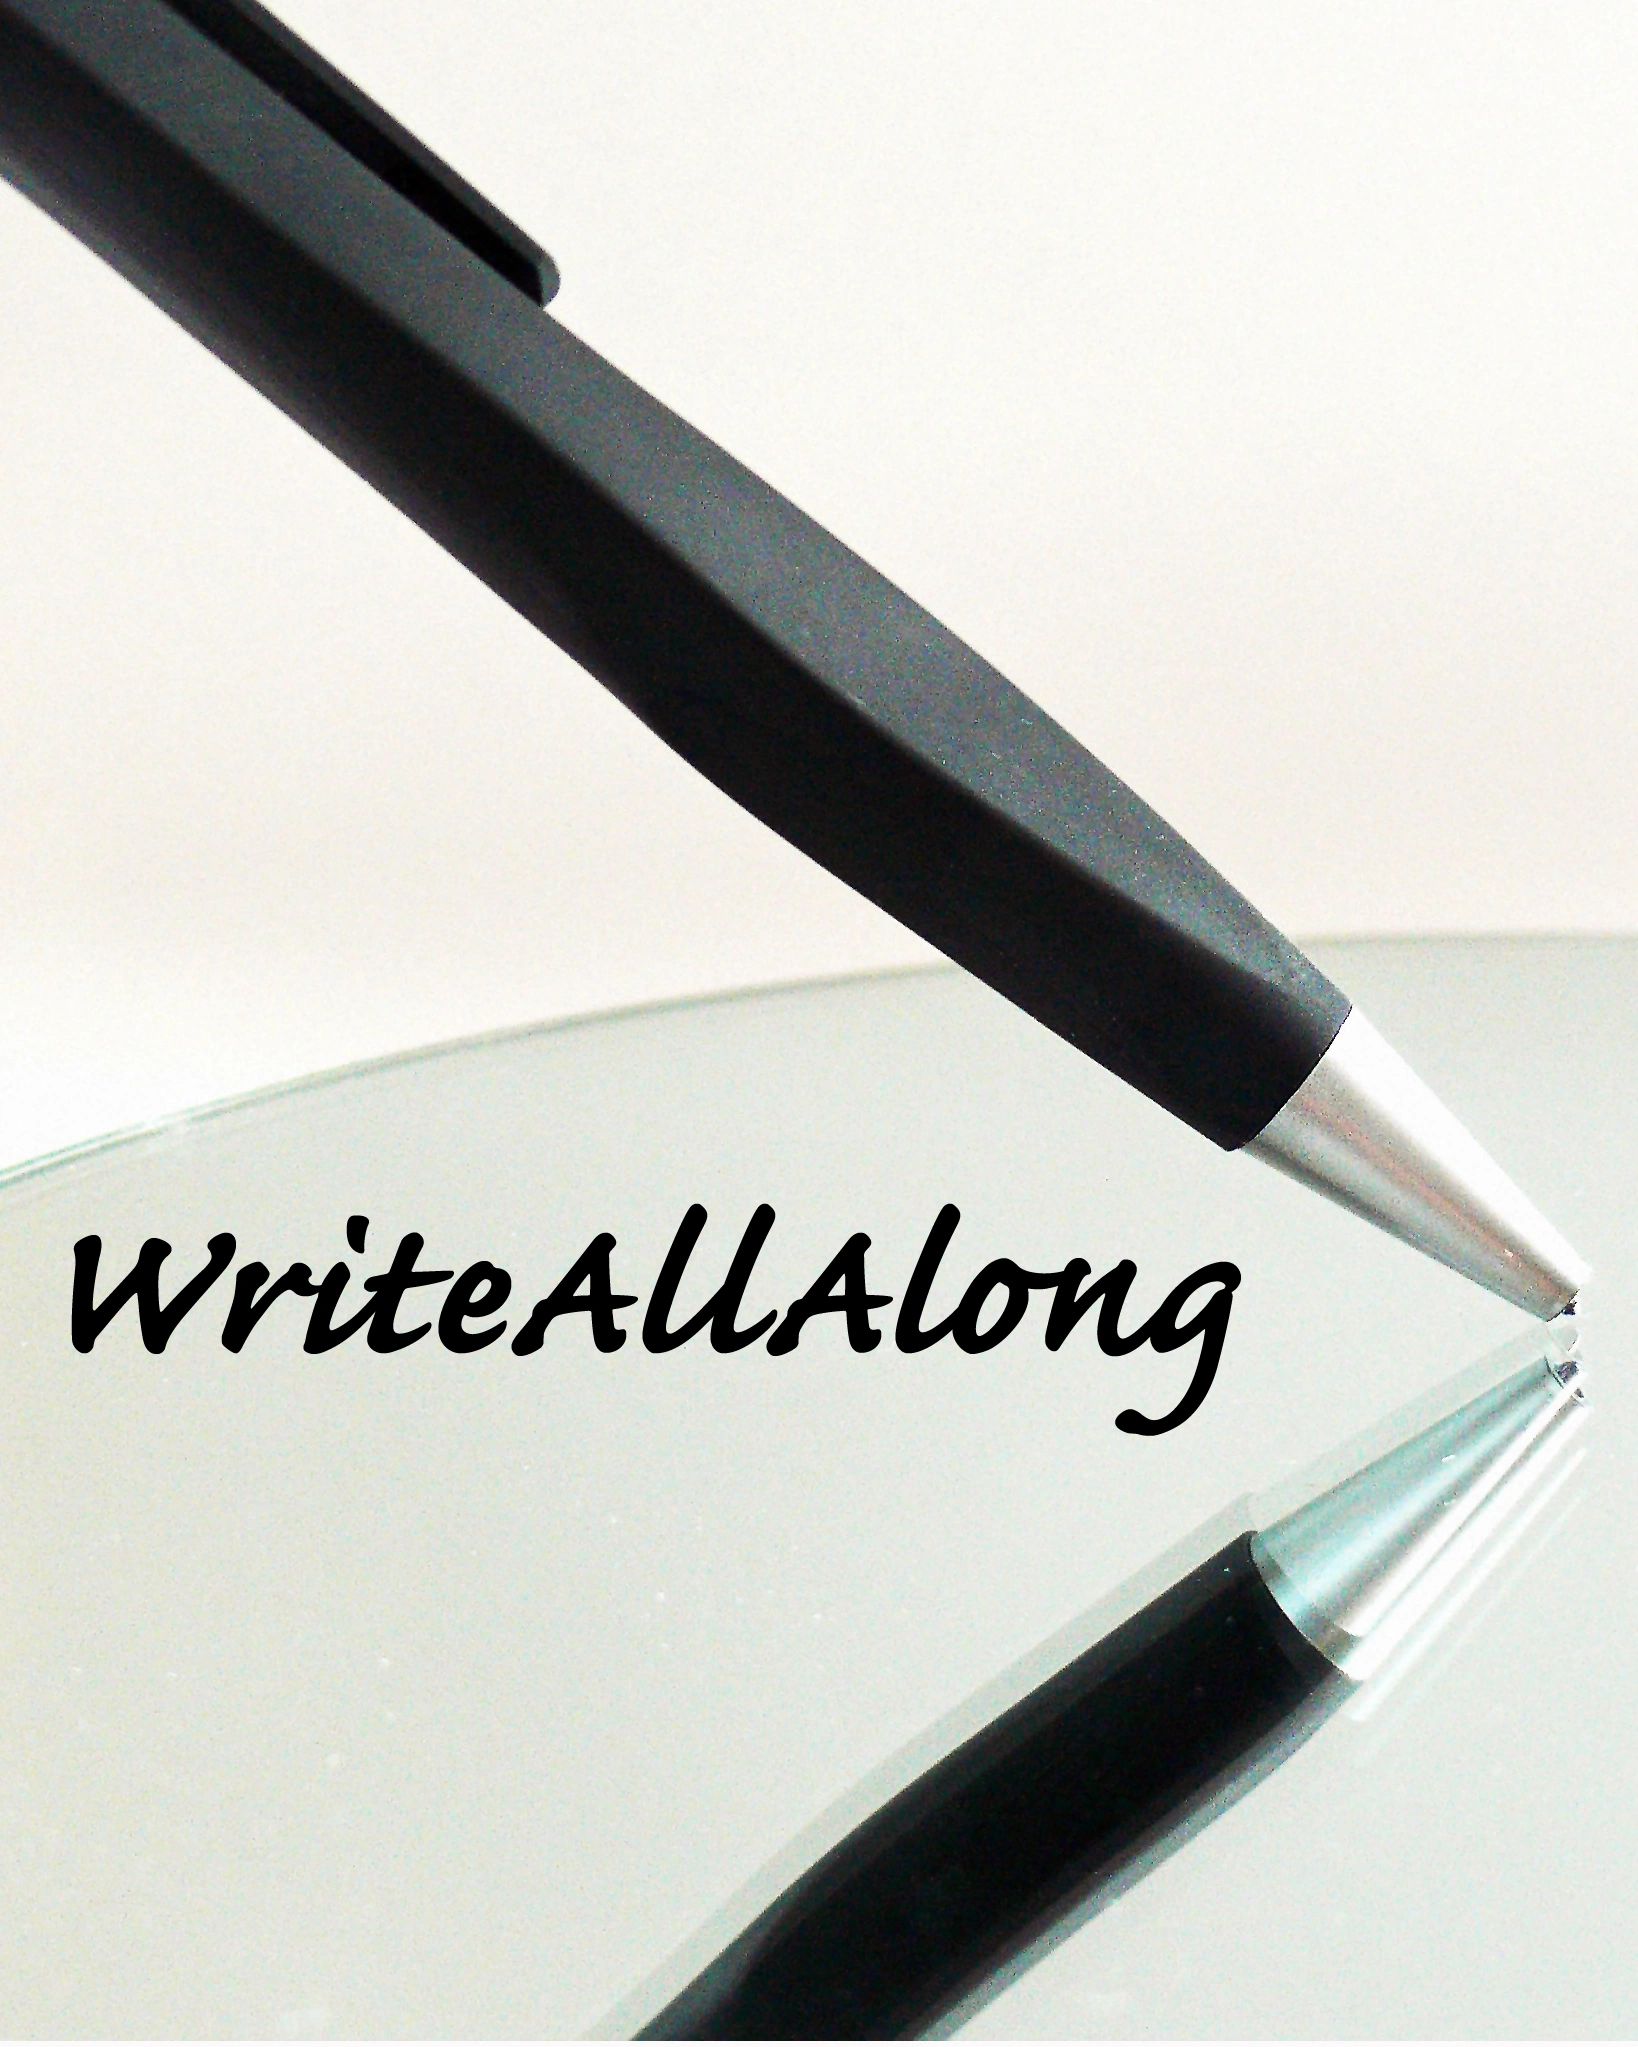 The WriteAllAlong logo